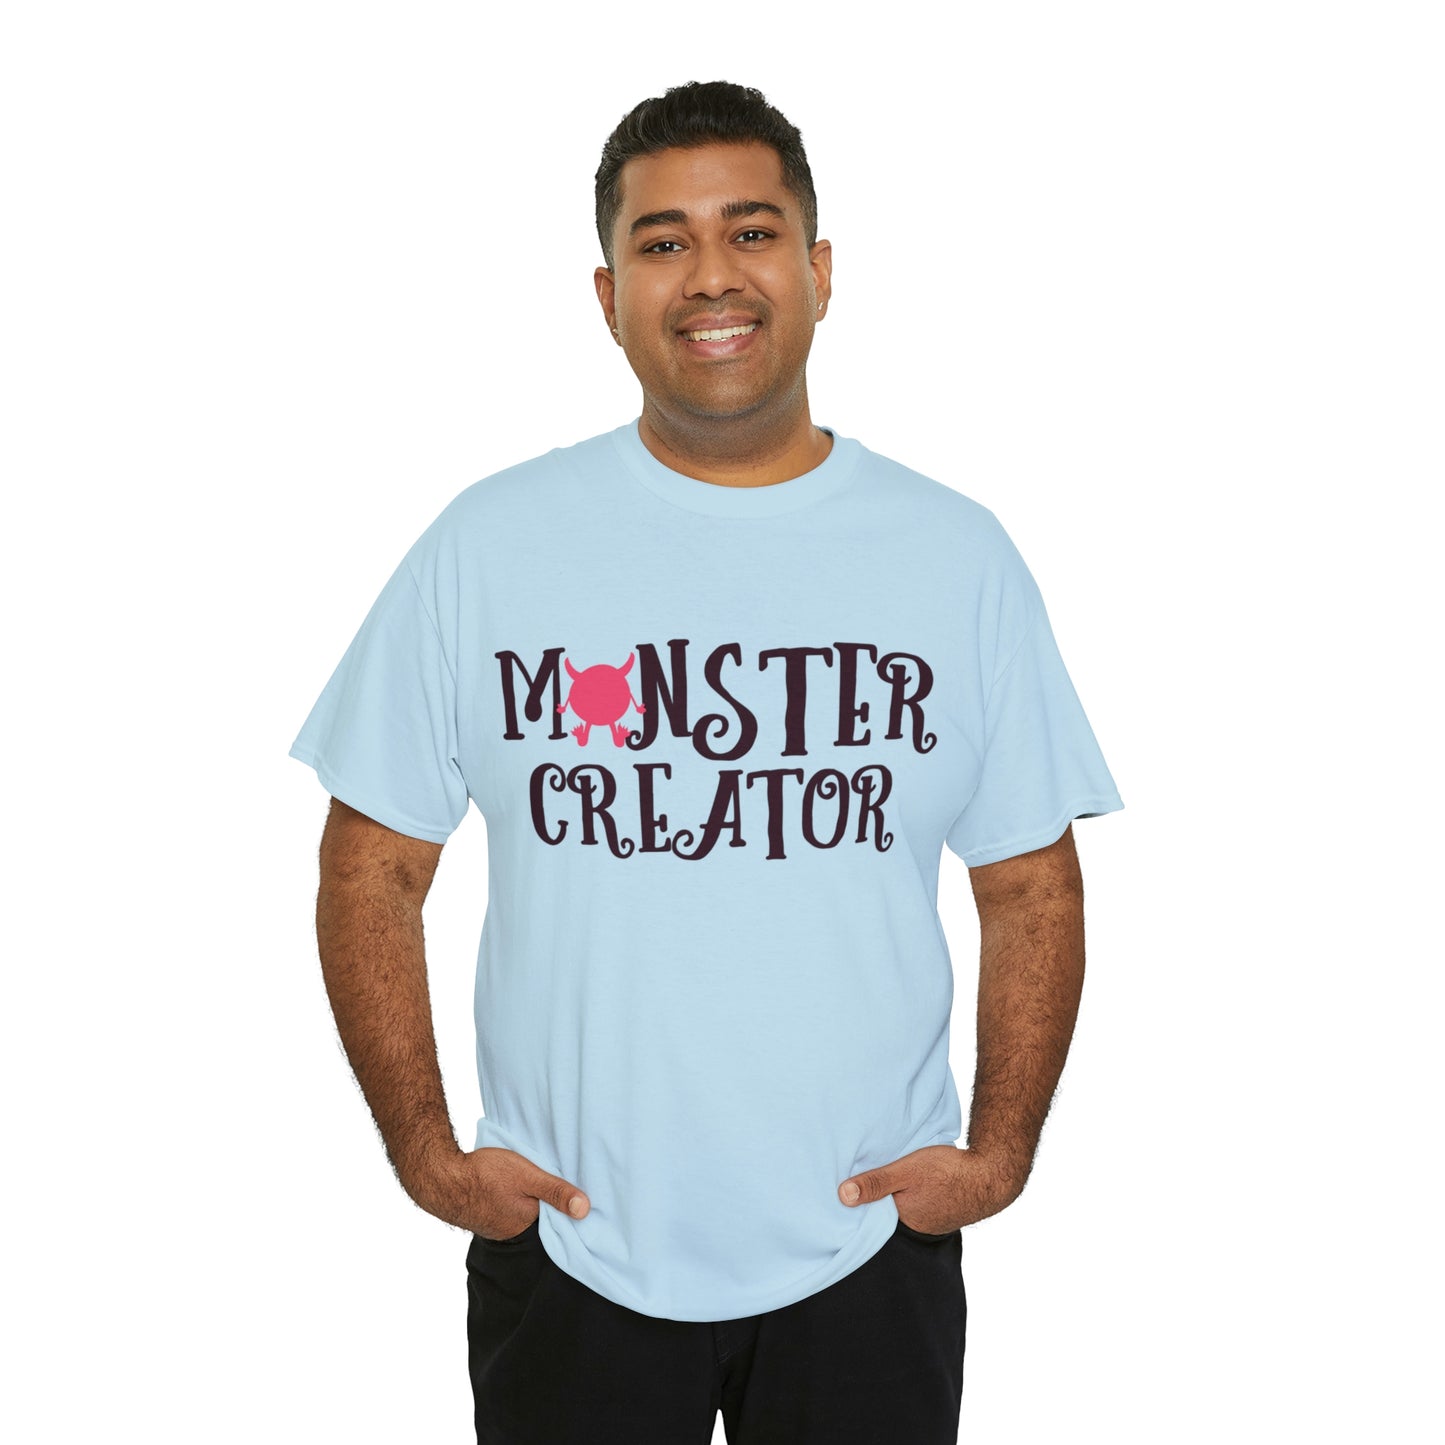 MONSTER CREATOR T-SHIRT